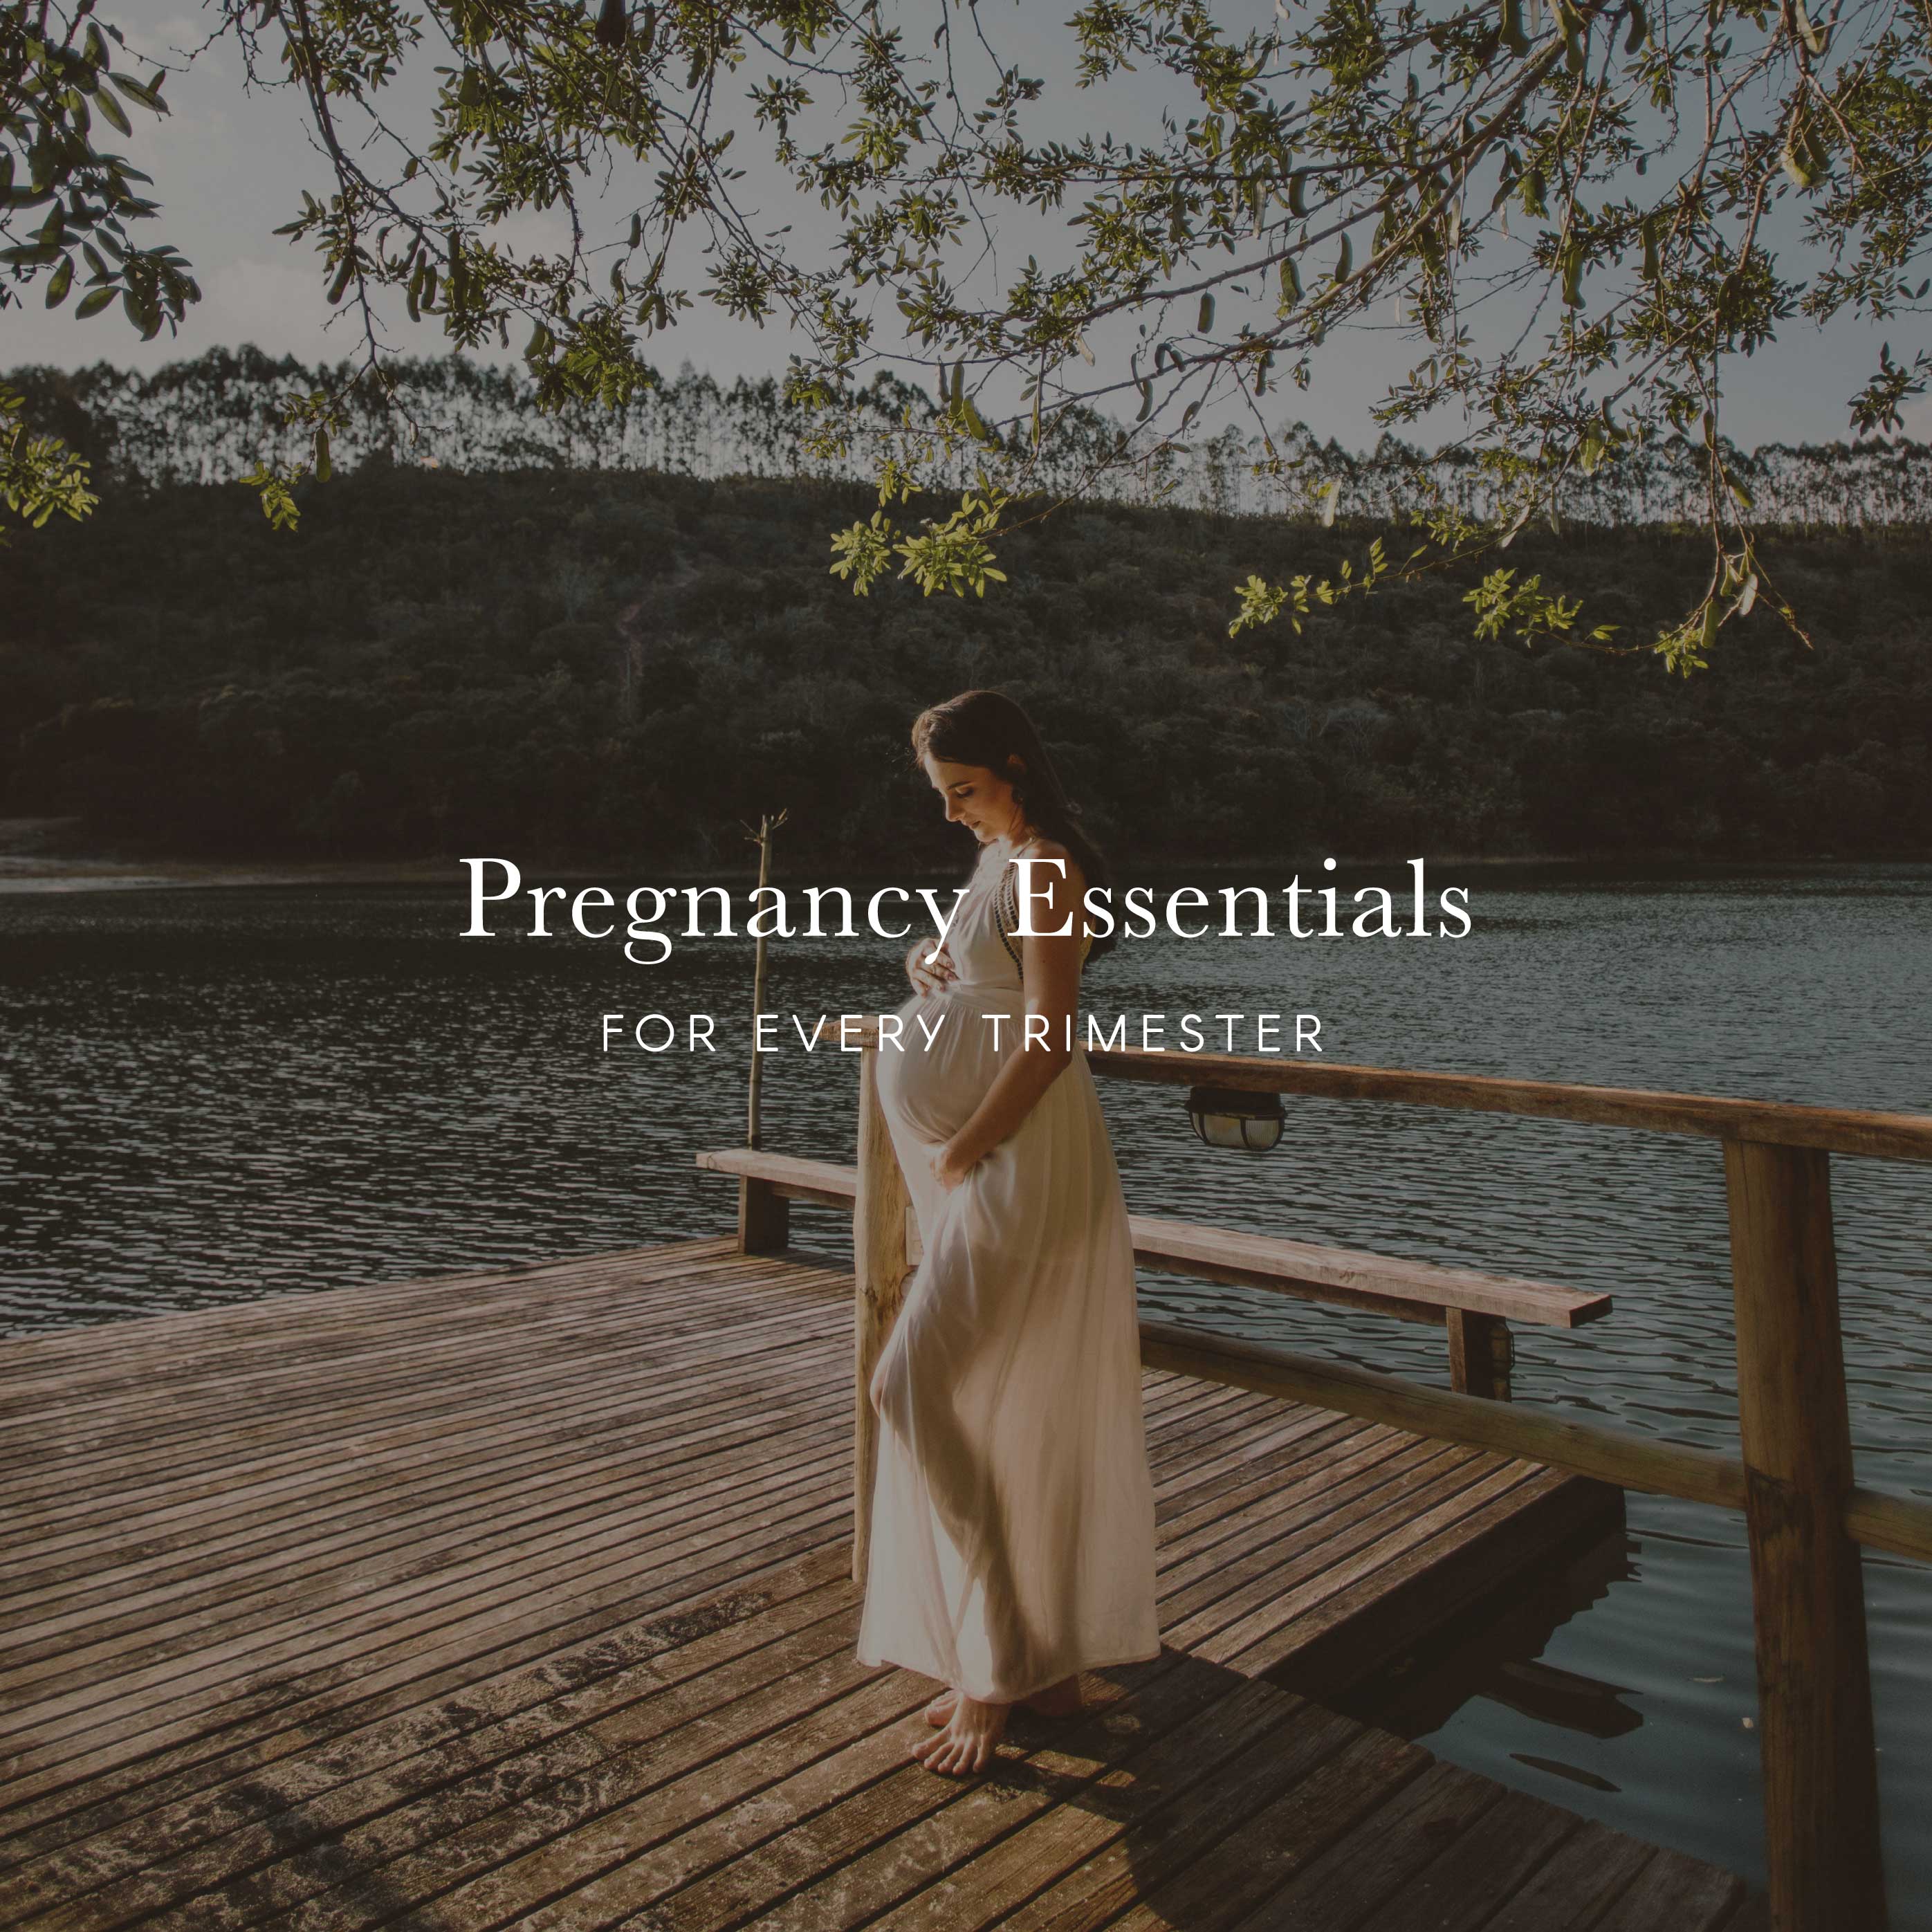 Pregnancy Essentials Part 4 - The Second Trimester - pregnancy essentials